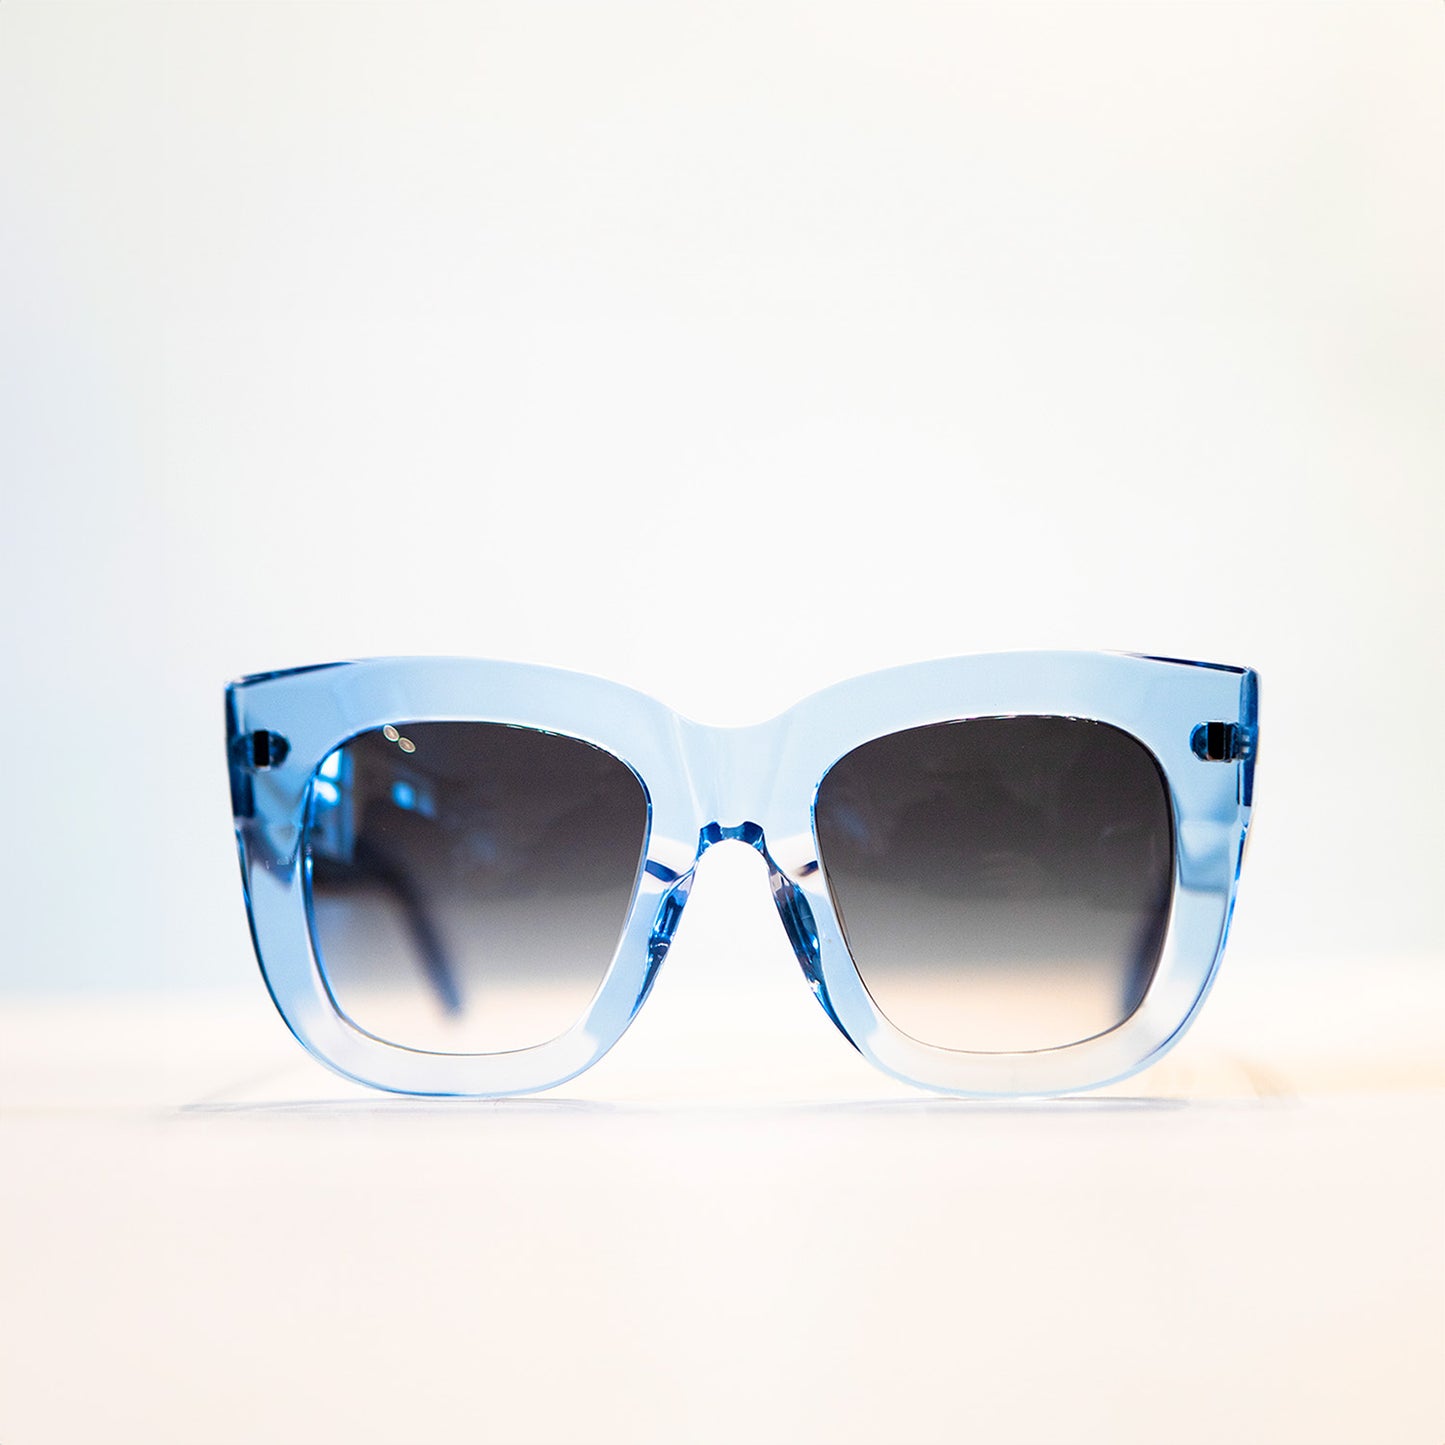 maxjenny! plant-based glasses for sun & optic blue